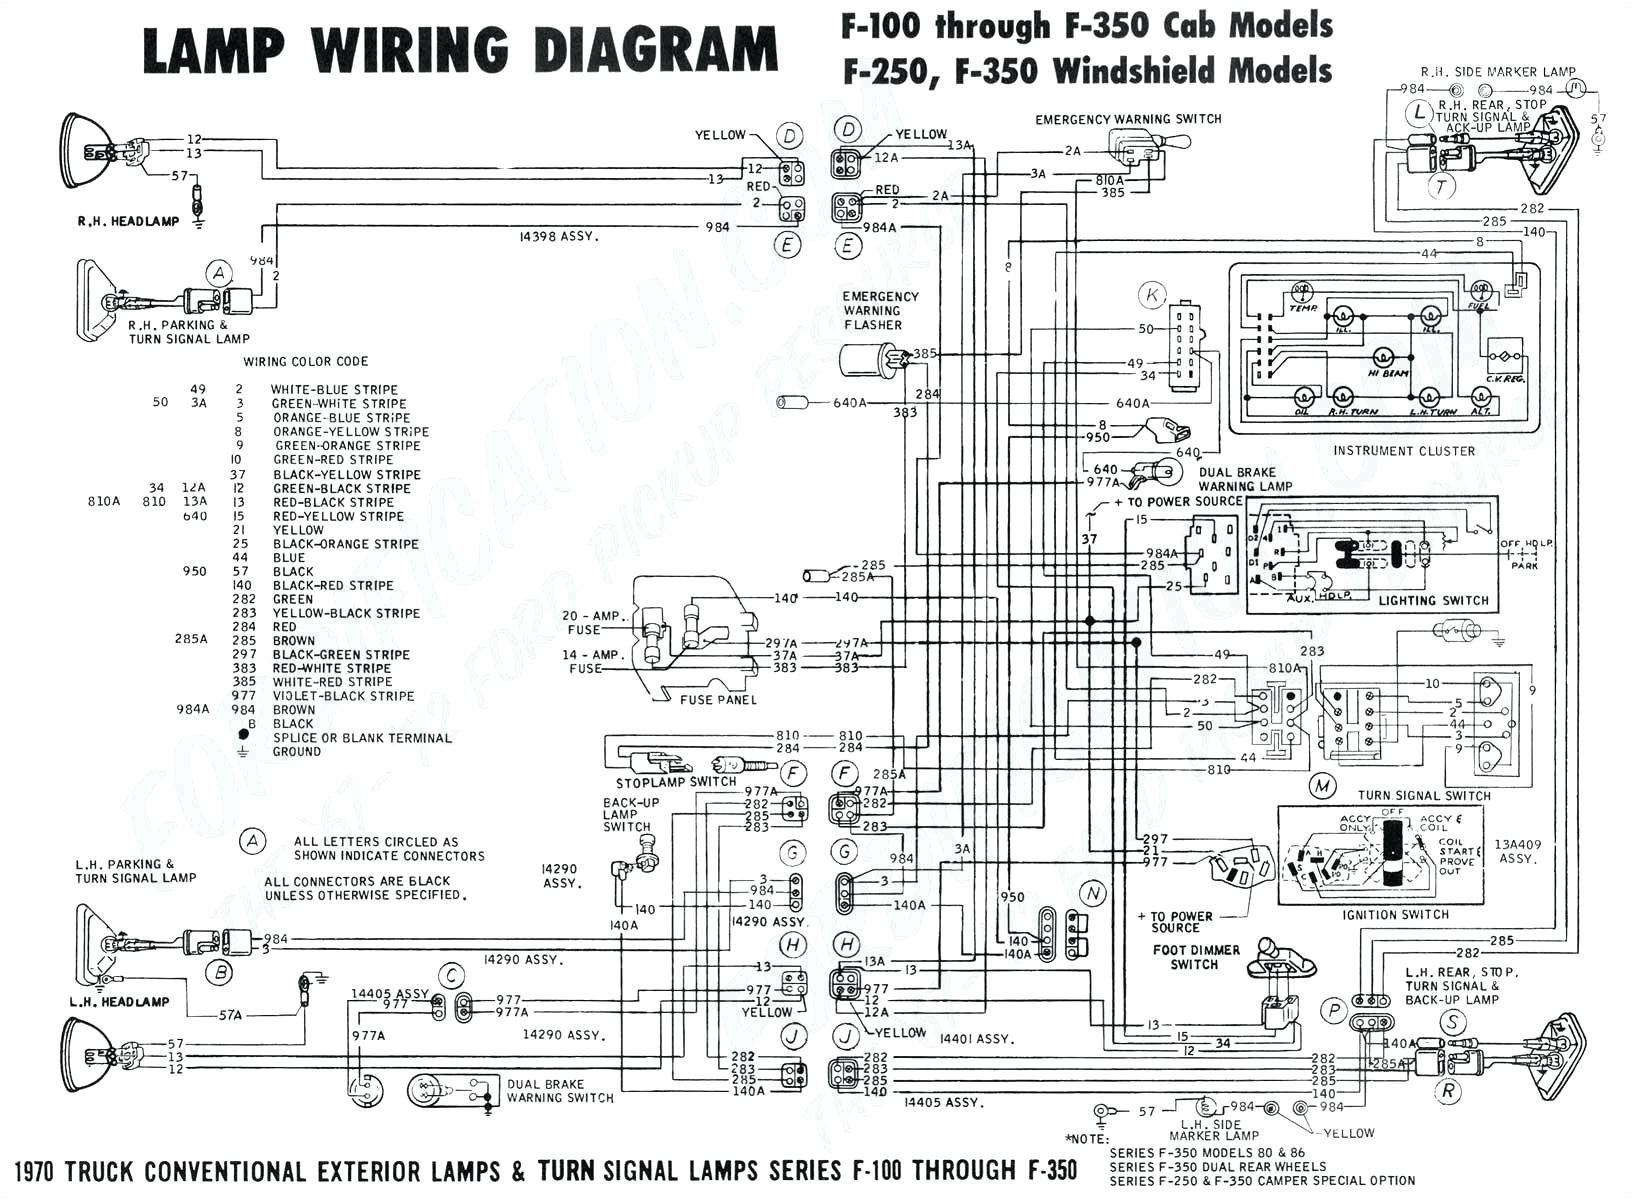 1966 dodge coronet wiring diagram wiring diagram name seivo image 1966 dodge coronet wiringdiagram seivo web search